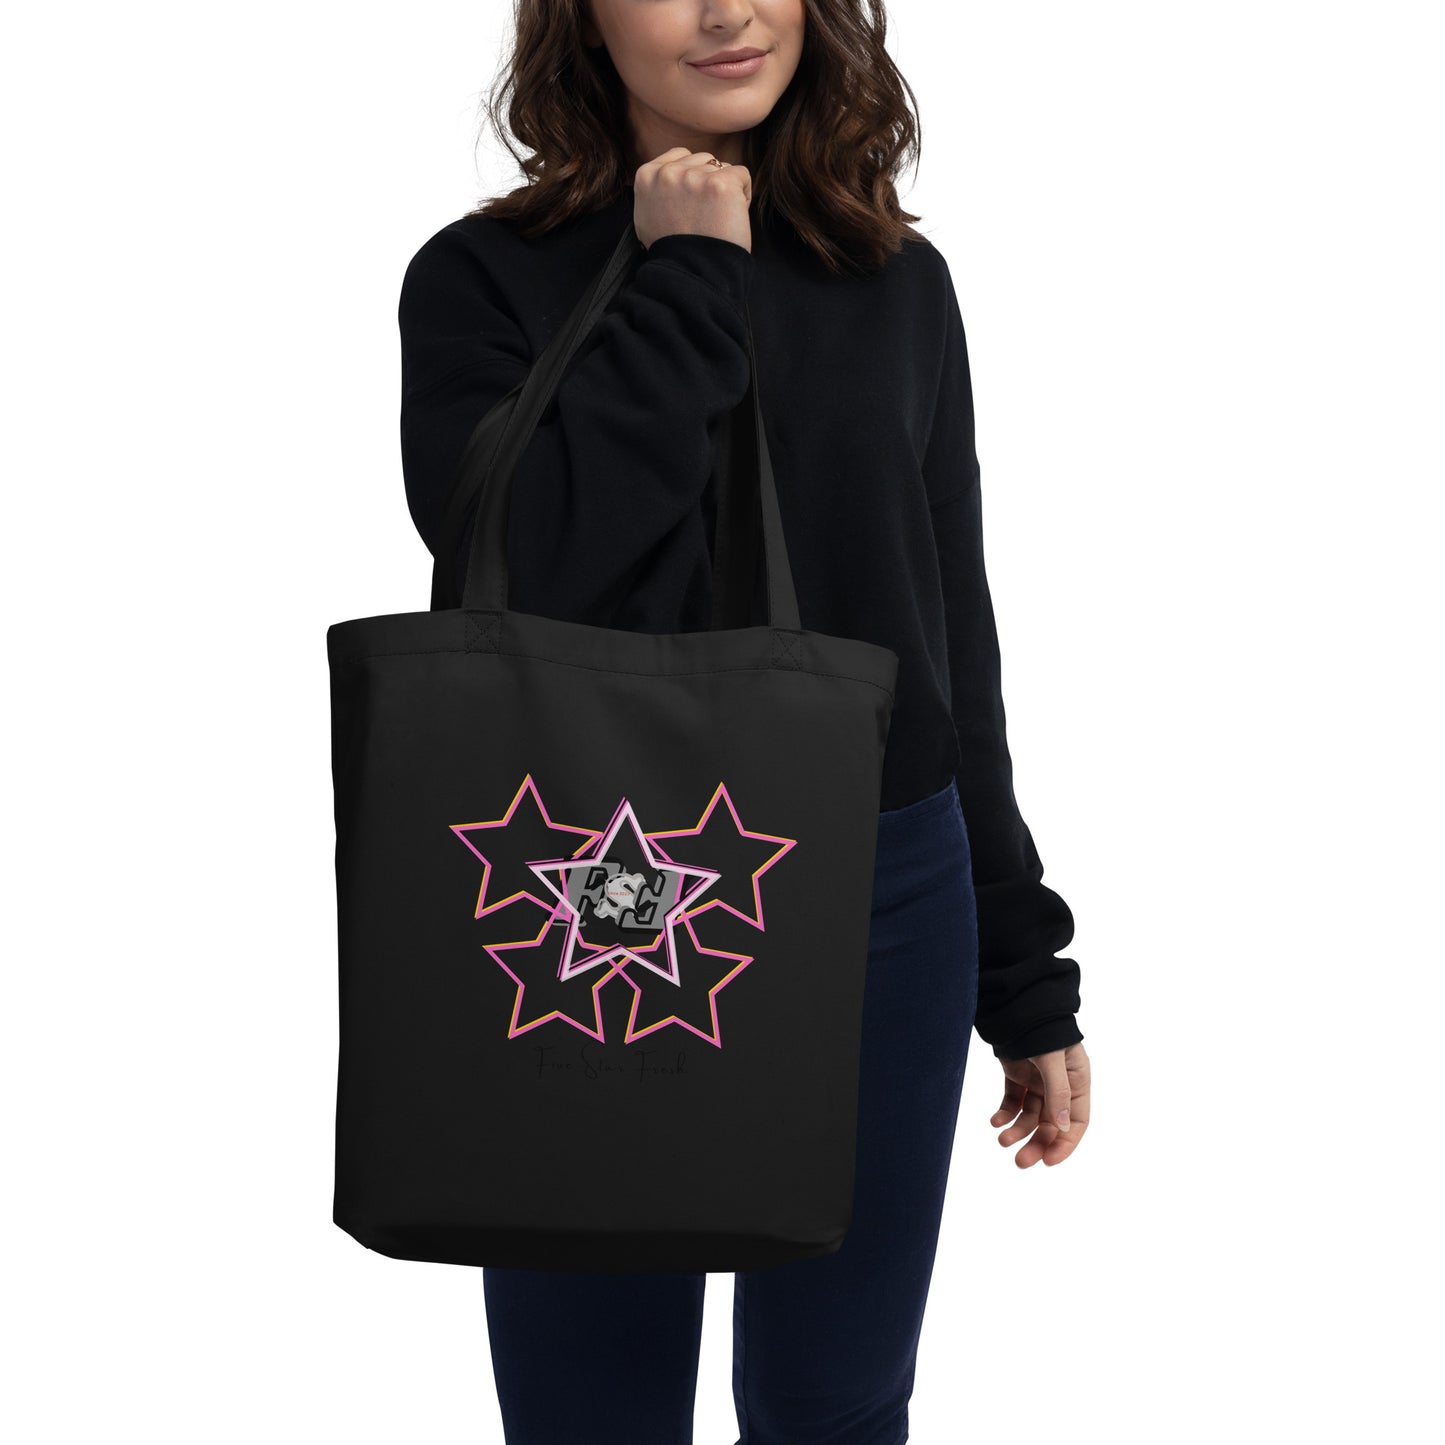 'Pink' Starz - Five Star Fresh Eco Tote Bag